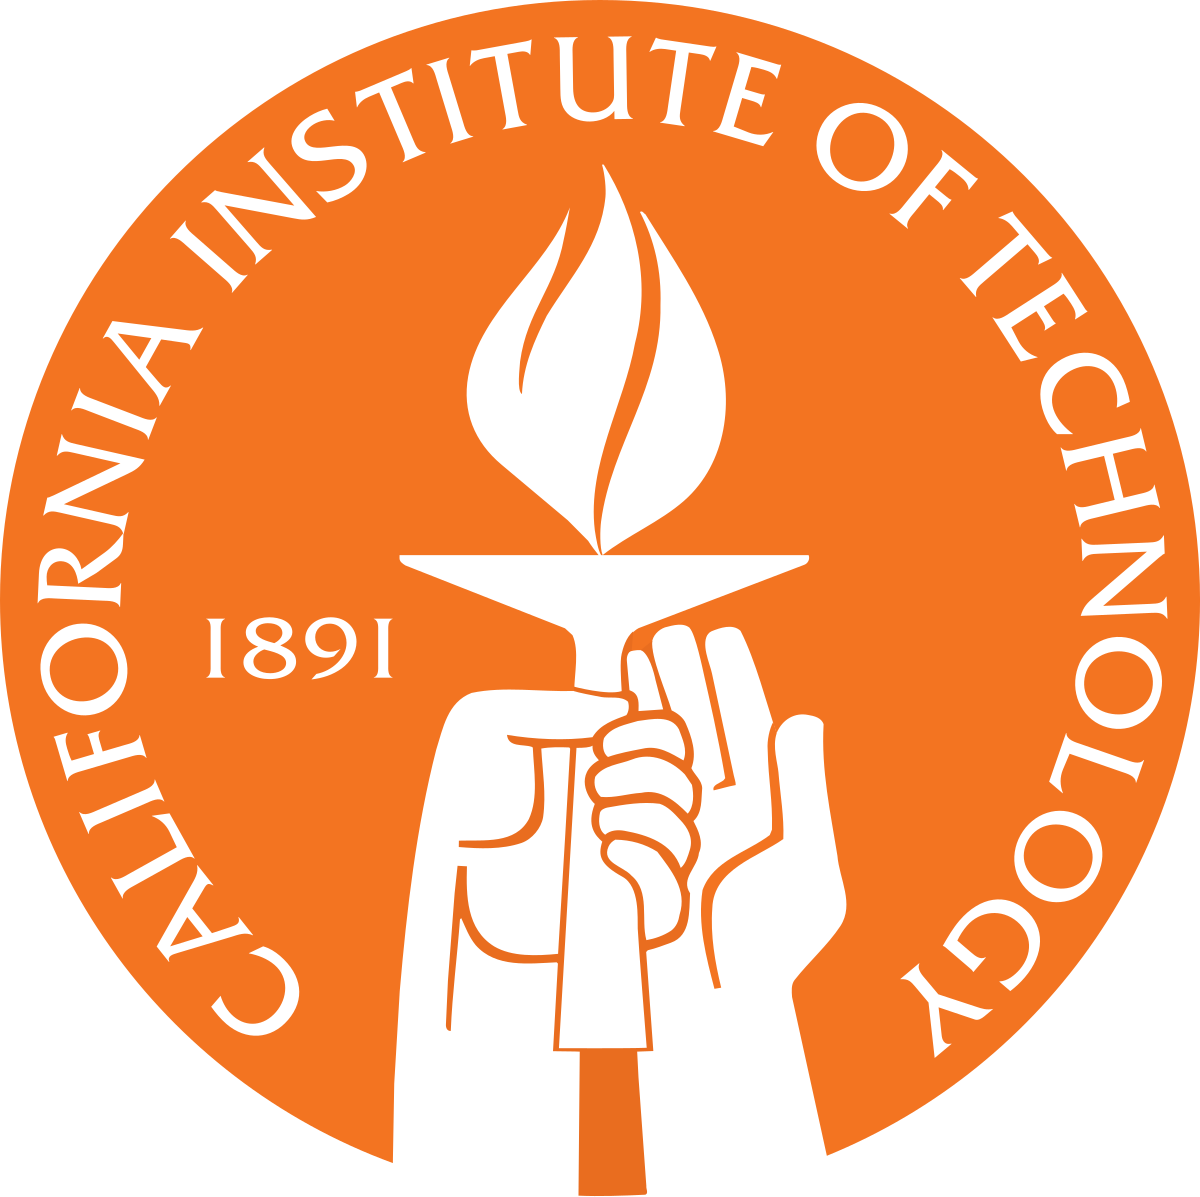 California Institute of Technology - Wikipedia